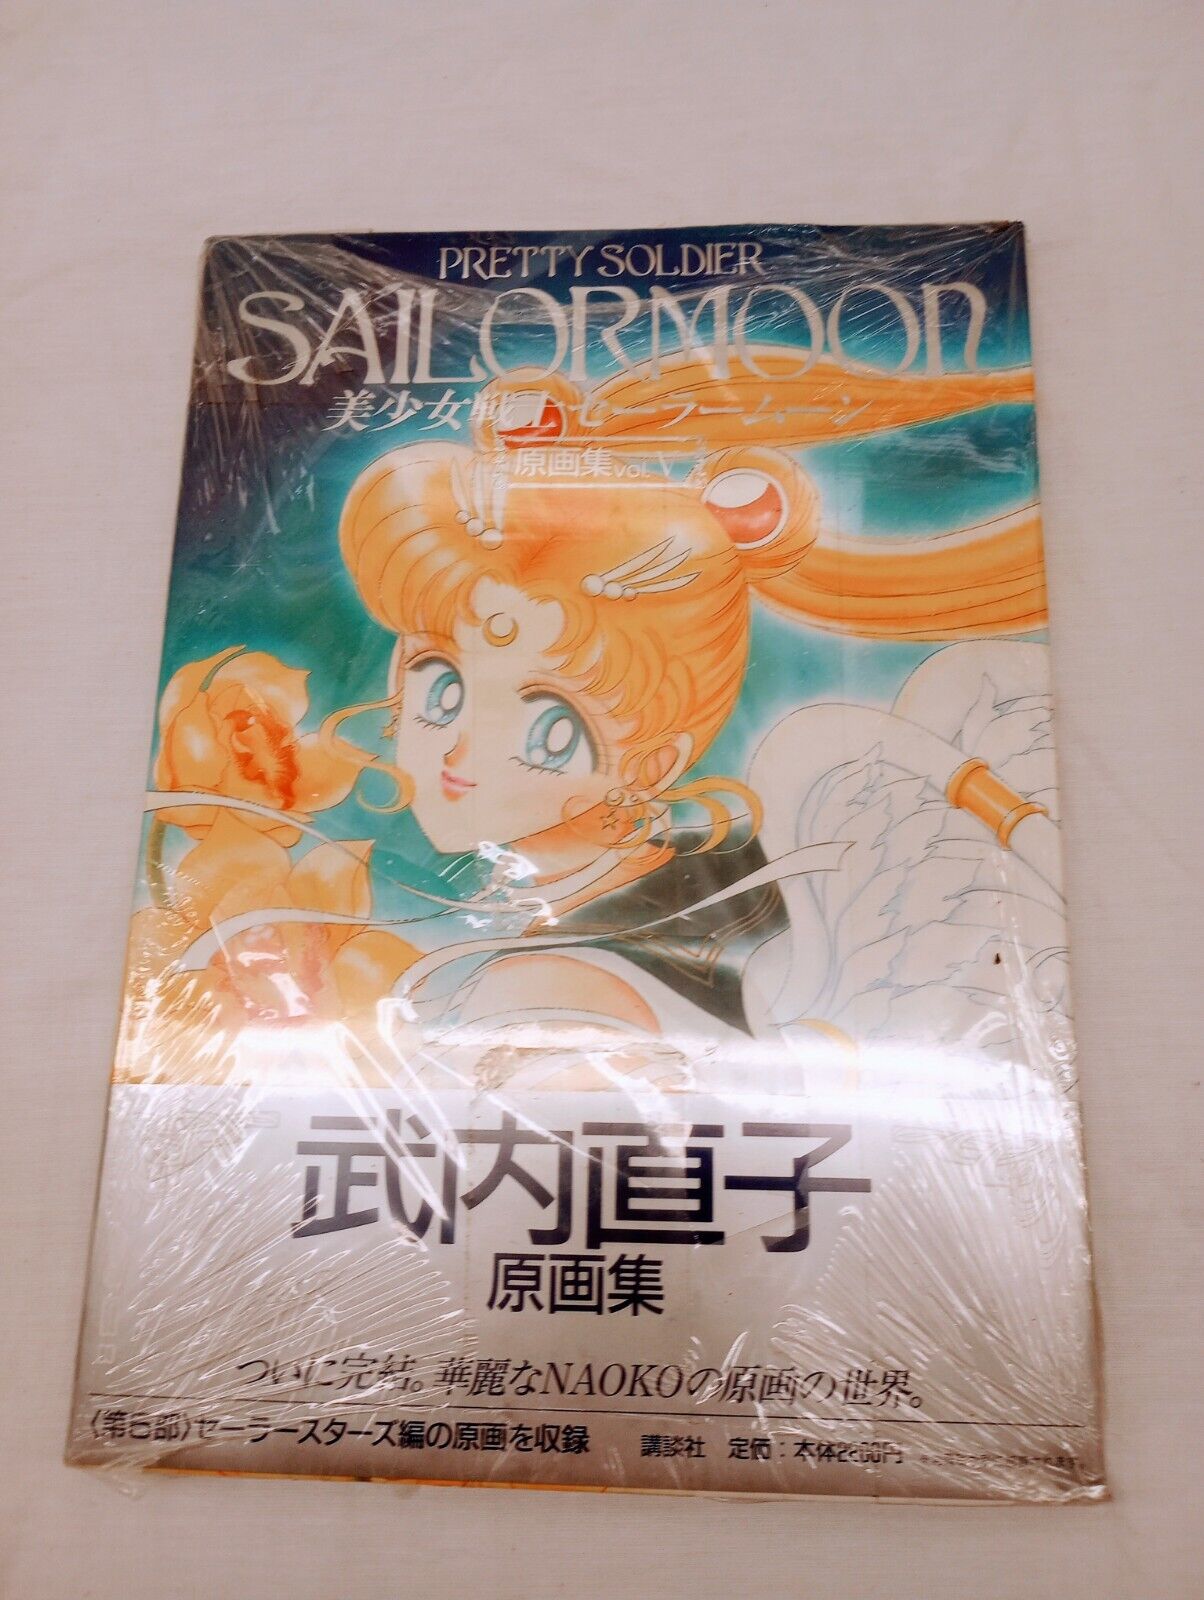 Pretty Soldier Sailor Moon #5 original illustration art book Naoko Takeuchi